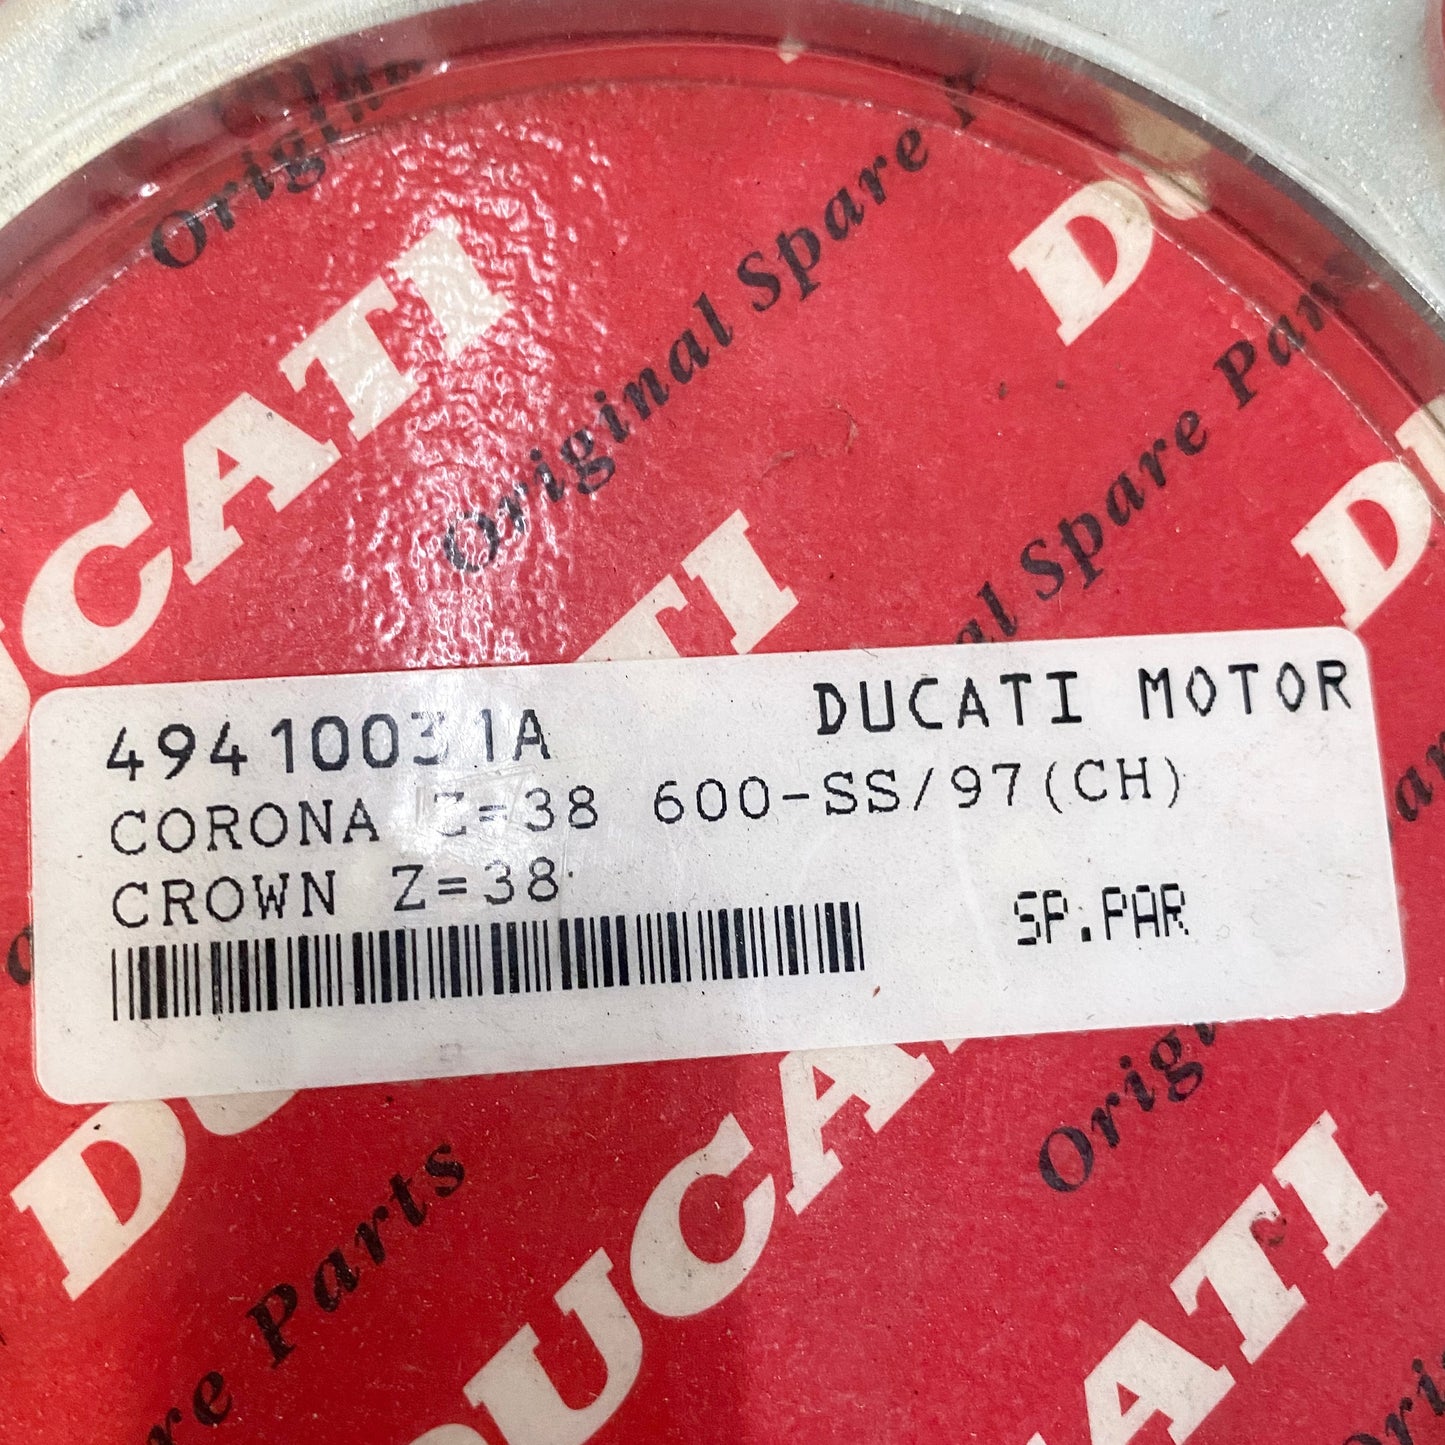 Ducati OEM Rear Sprocket M600/ M750 49410031A